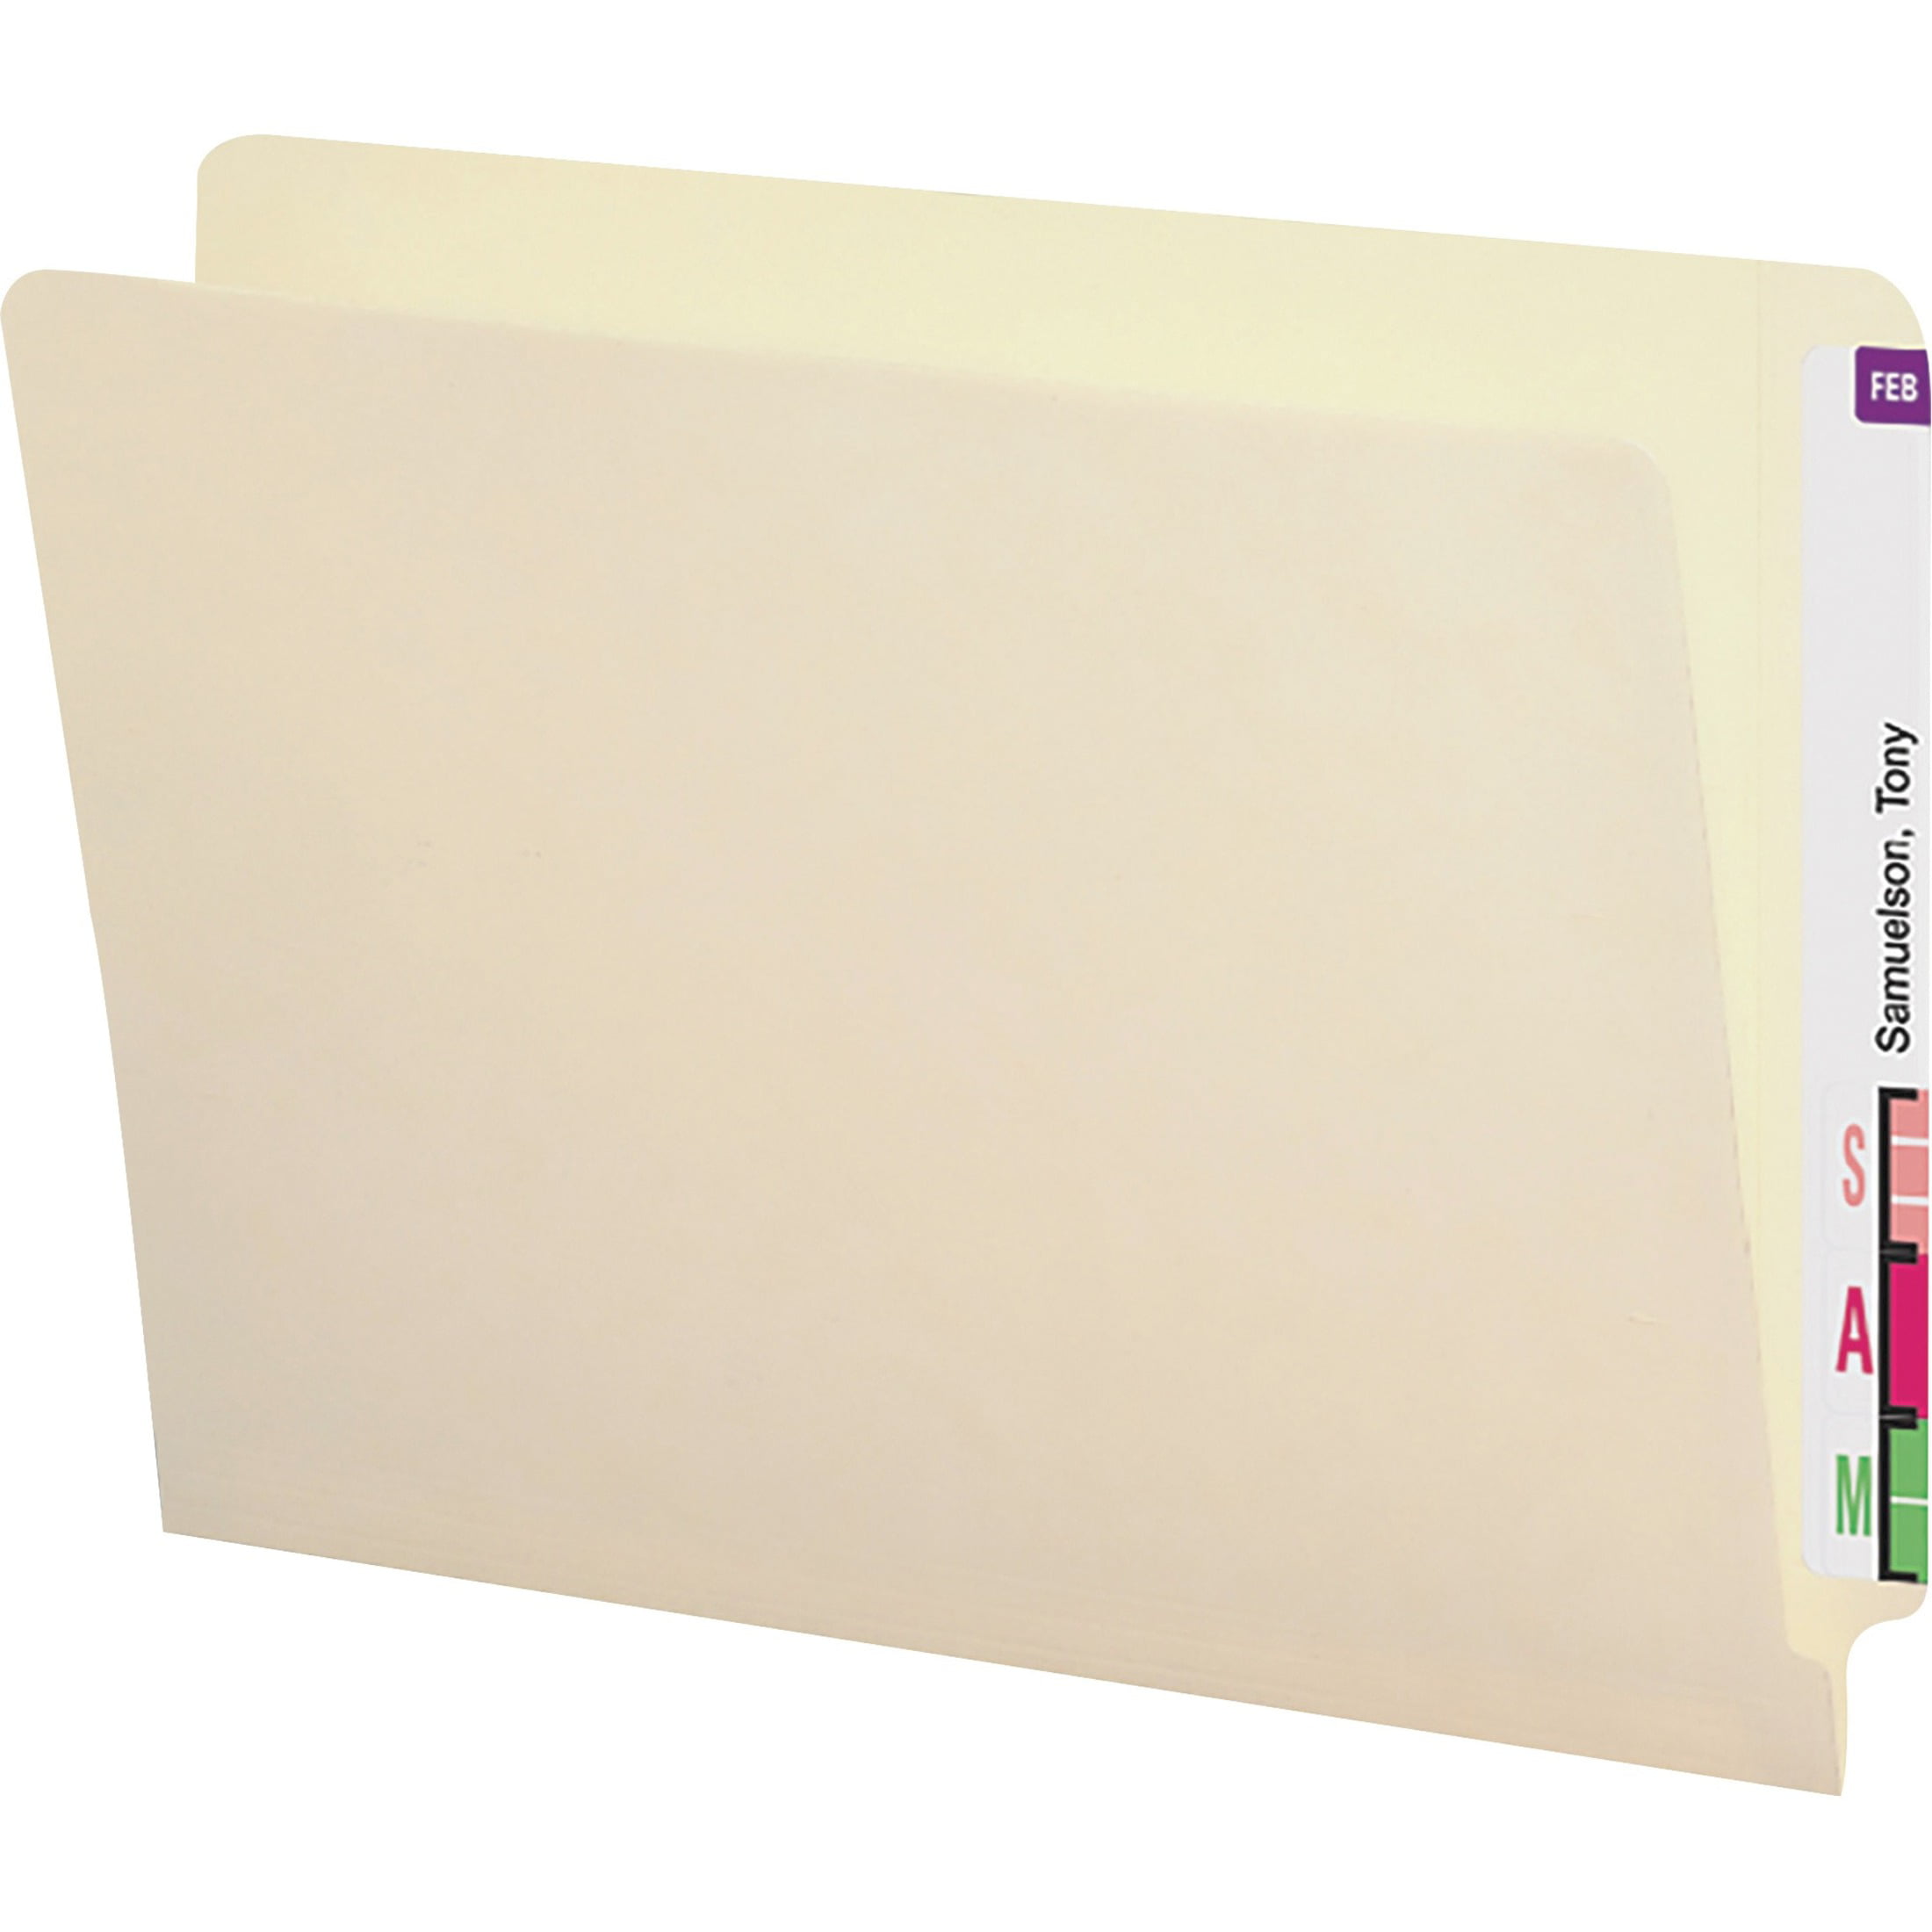 Smead End Tab File Folder 100 per Box Manila 2X Pack of 100 24110 Letter Size Shelf-Master Reinforced Straight-Cut Tab 